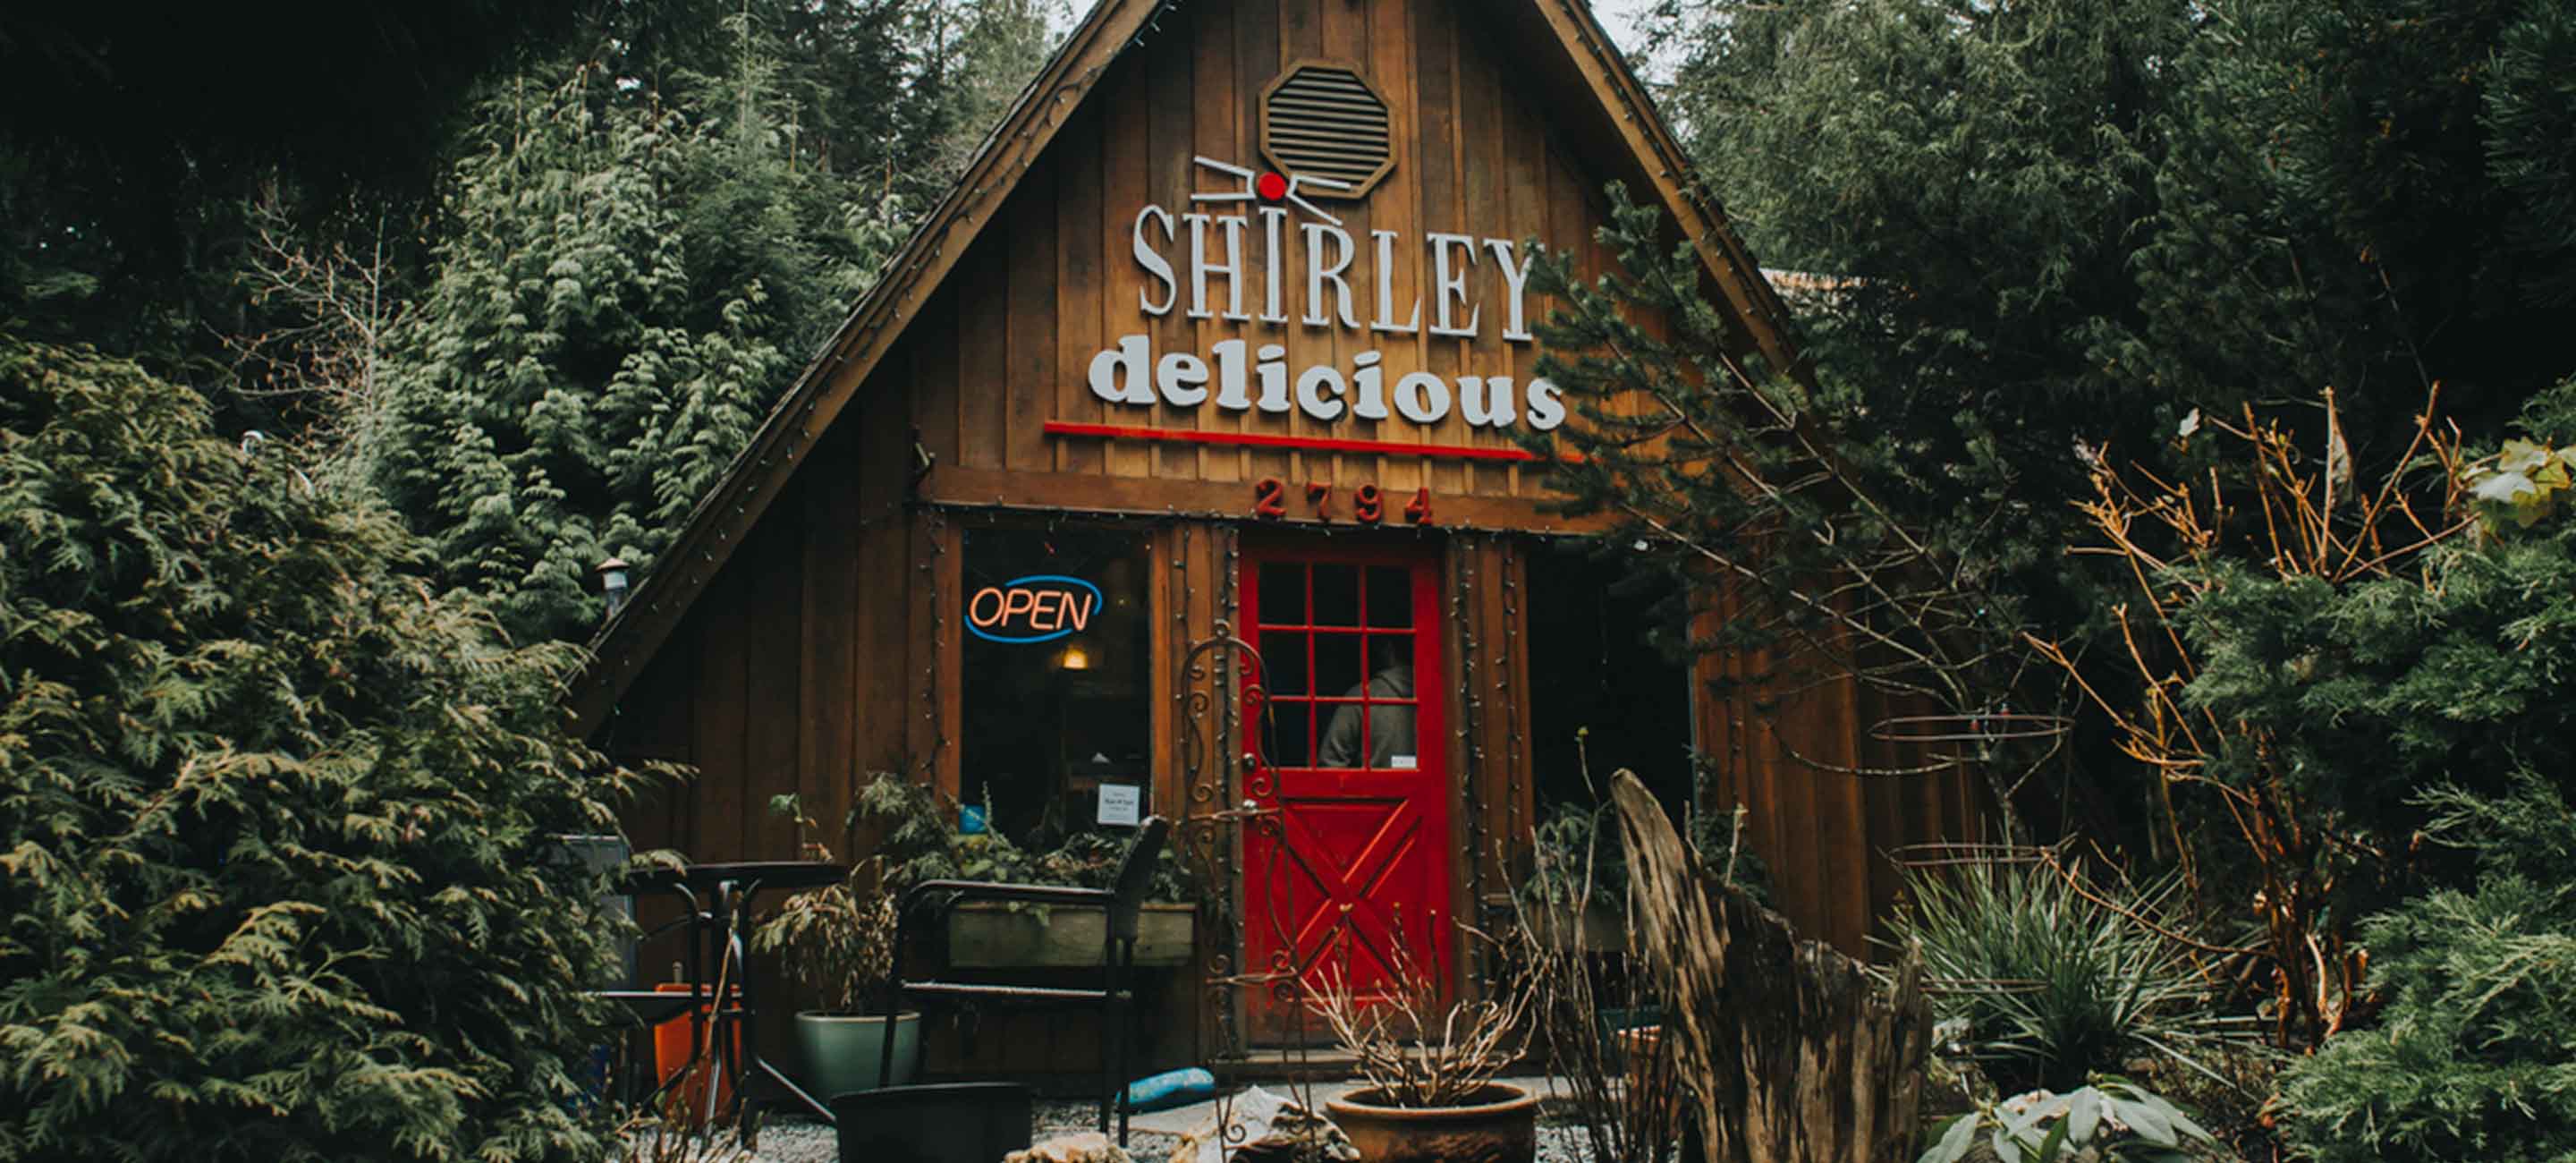 Shirley Delicious café by Destination BC/@melaniewonder